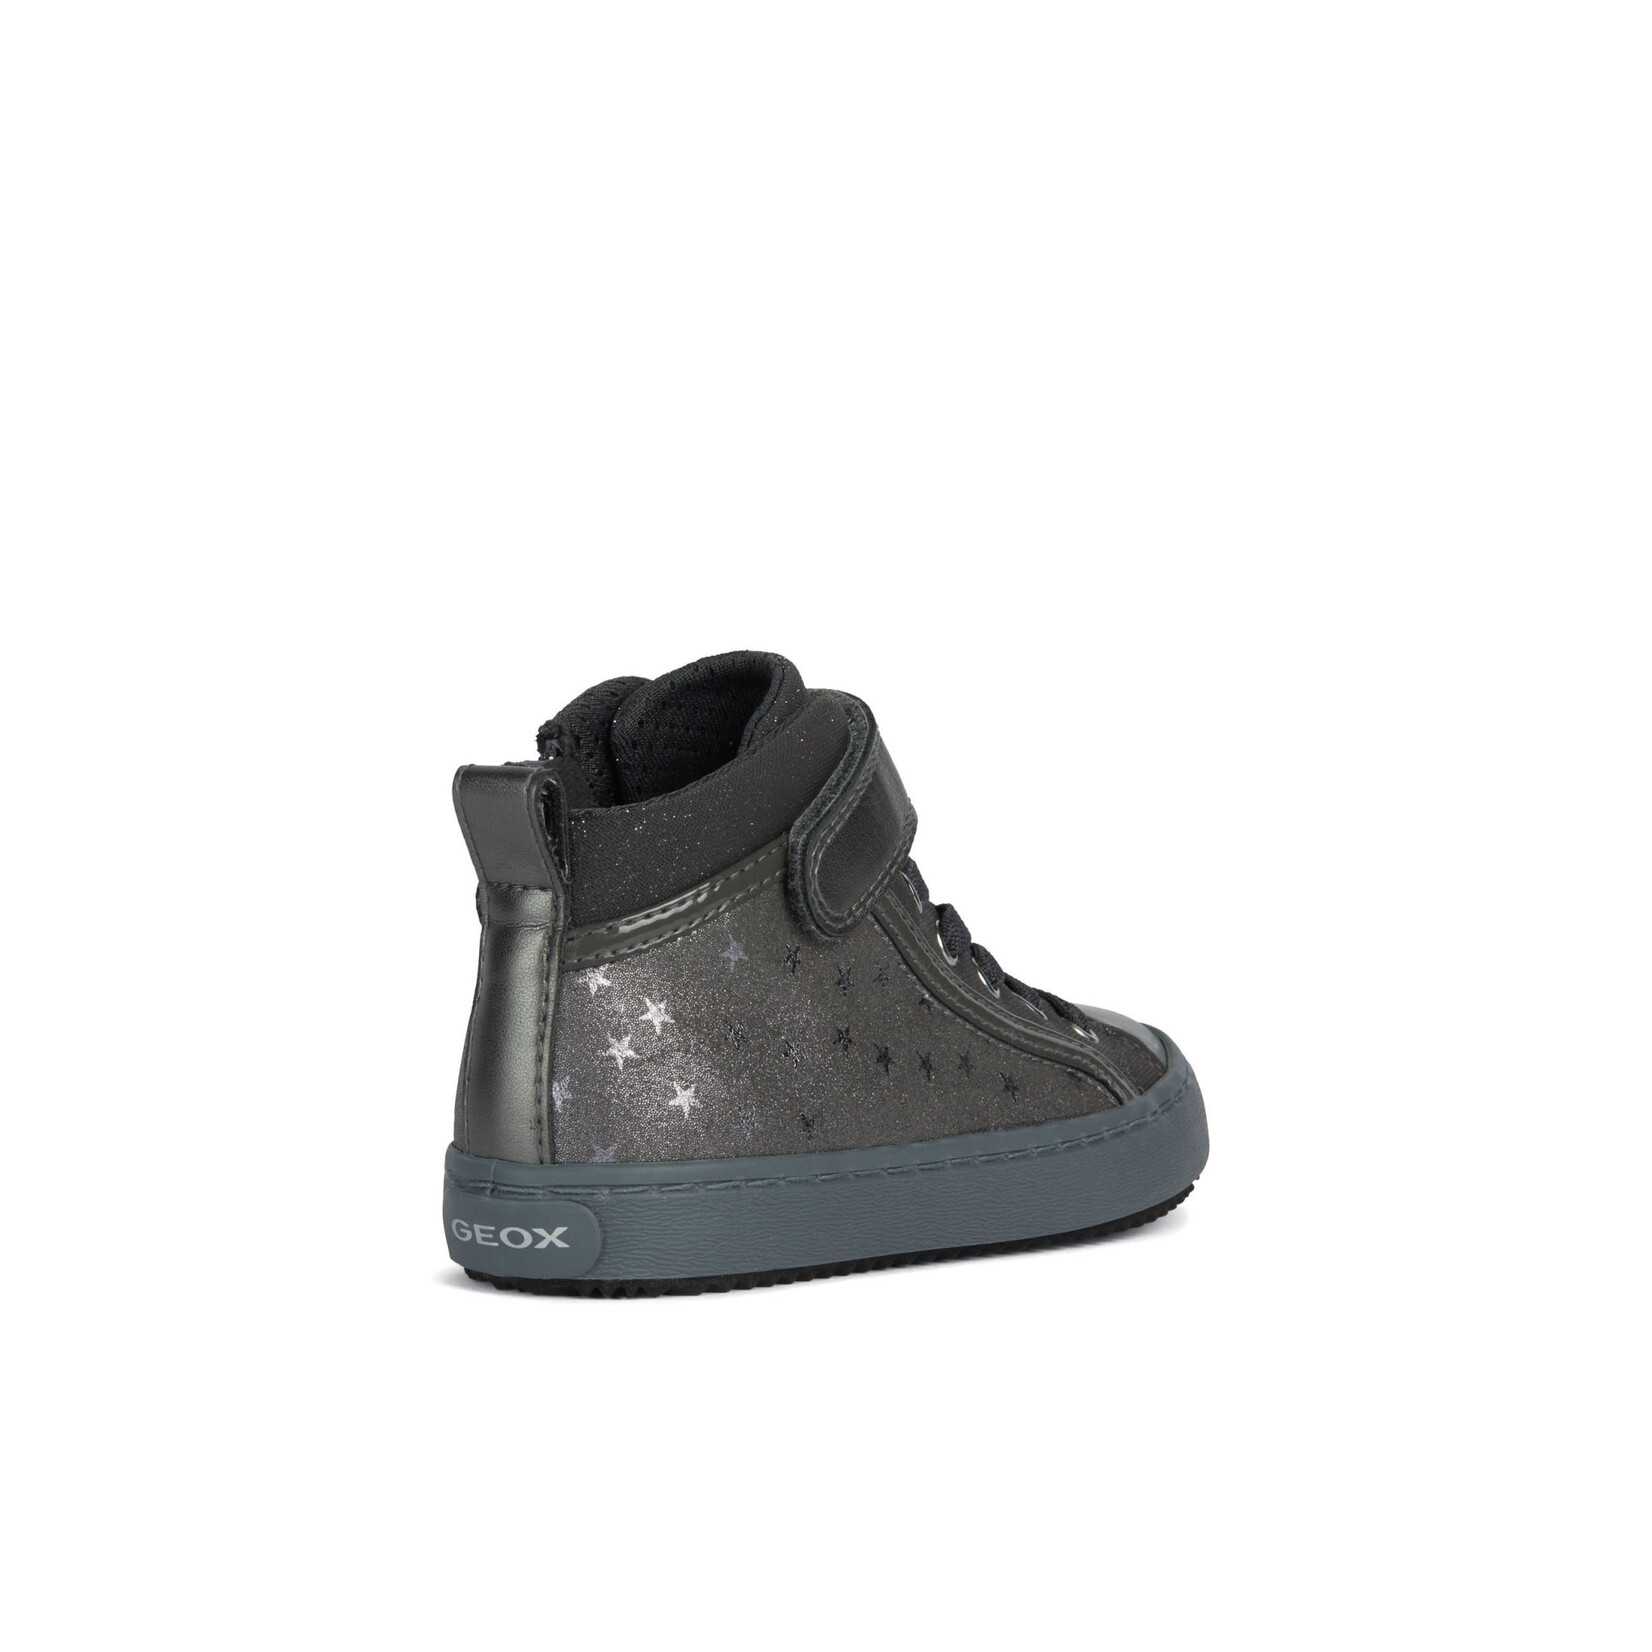 Geox GEOX - High-top Shoes in Glitter Grey with Star Print 'J. Kalispera G. I'